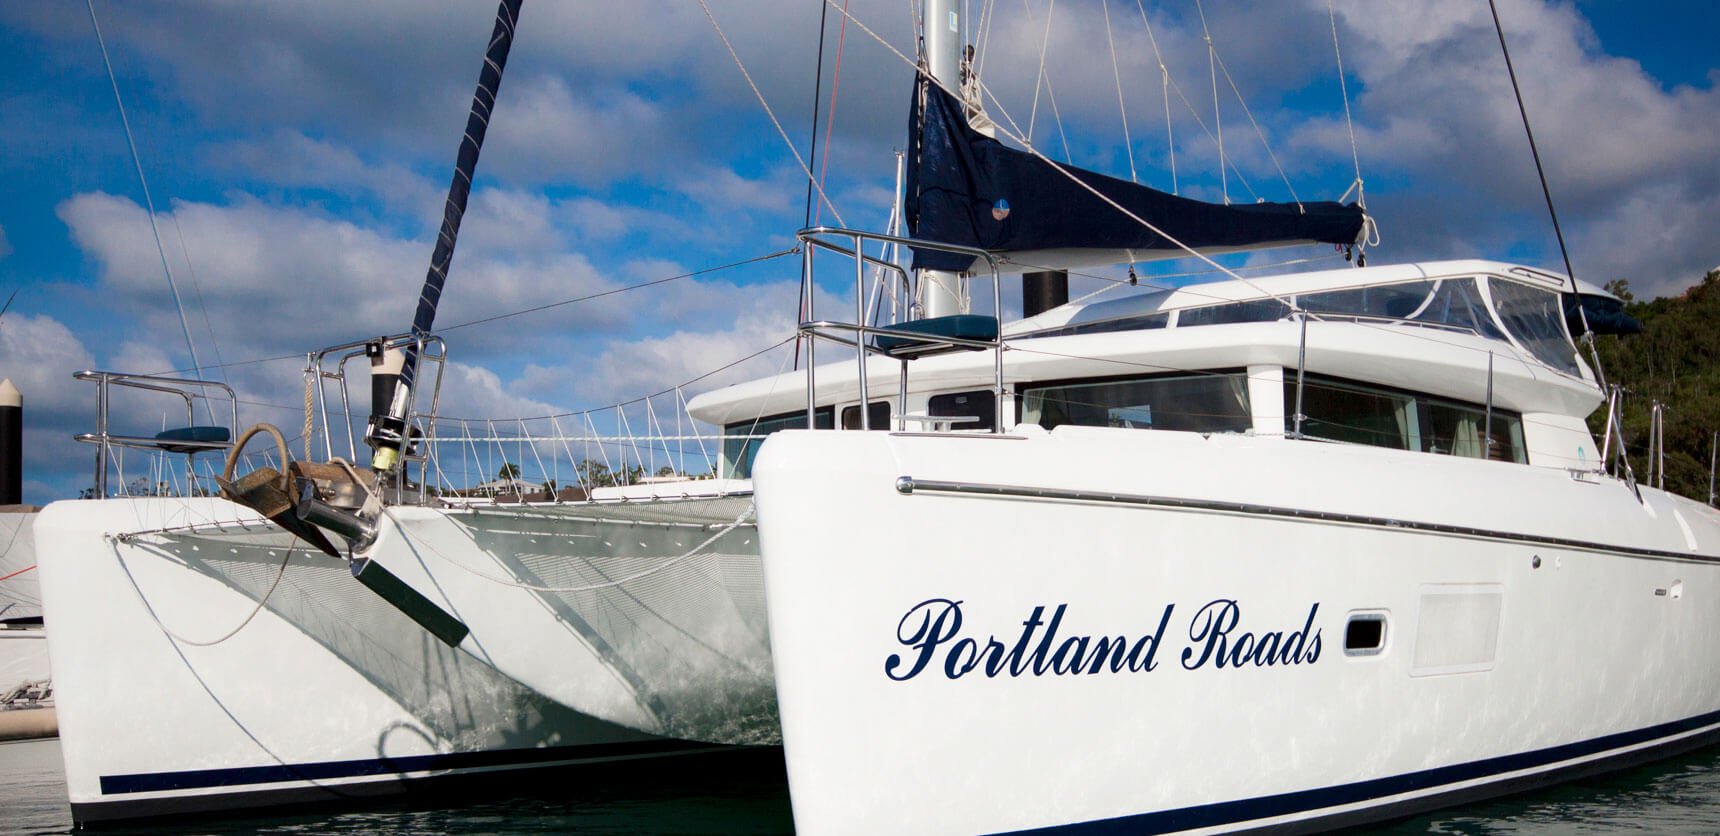 Portland Roads - Whitsundays Yacht Charter